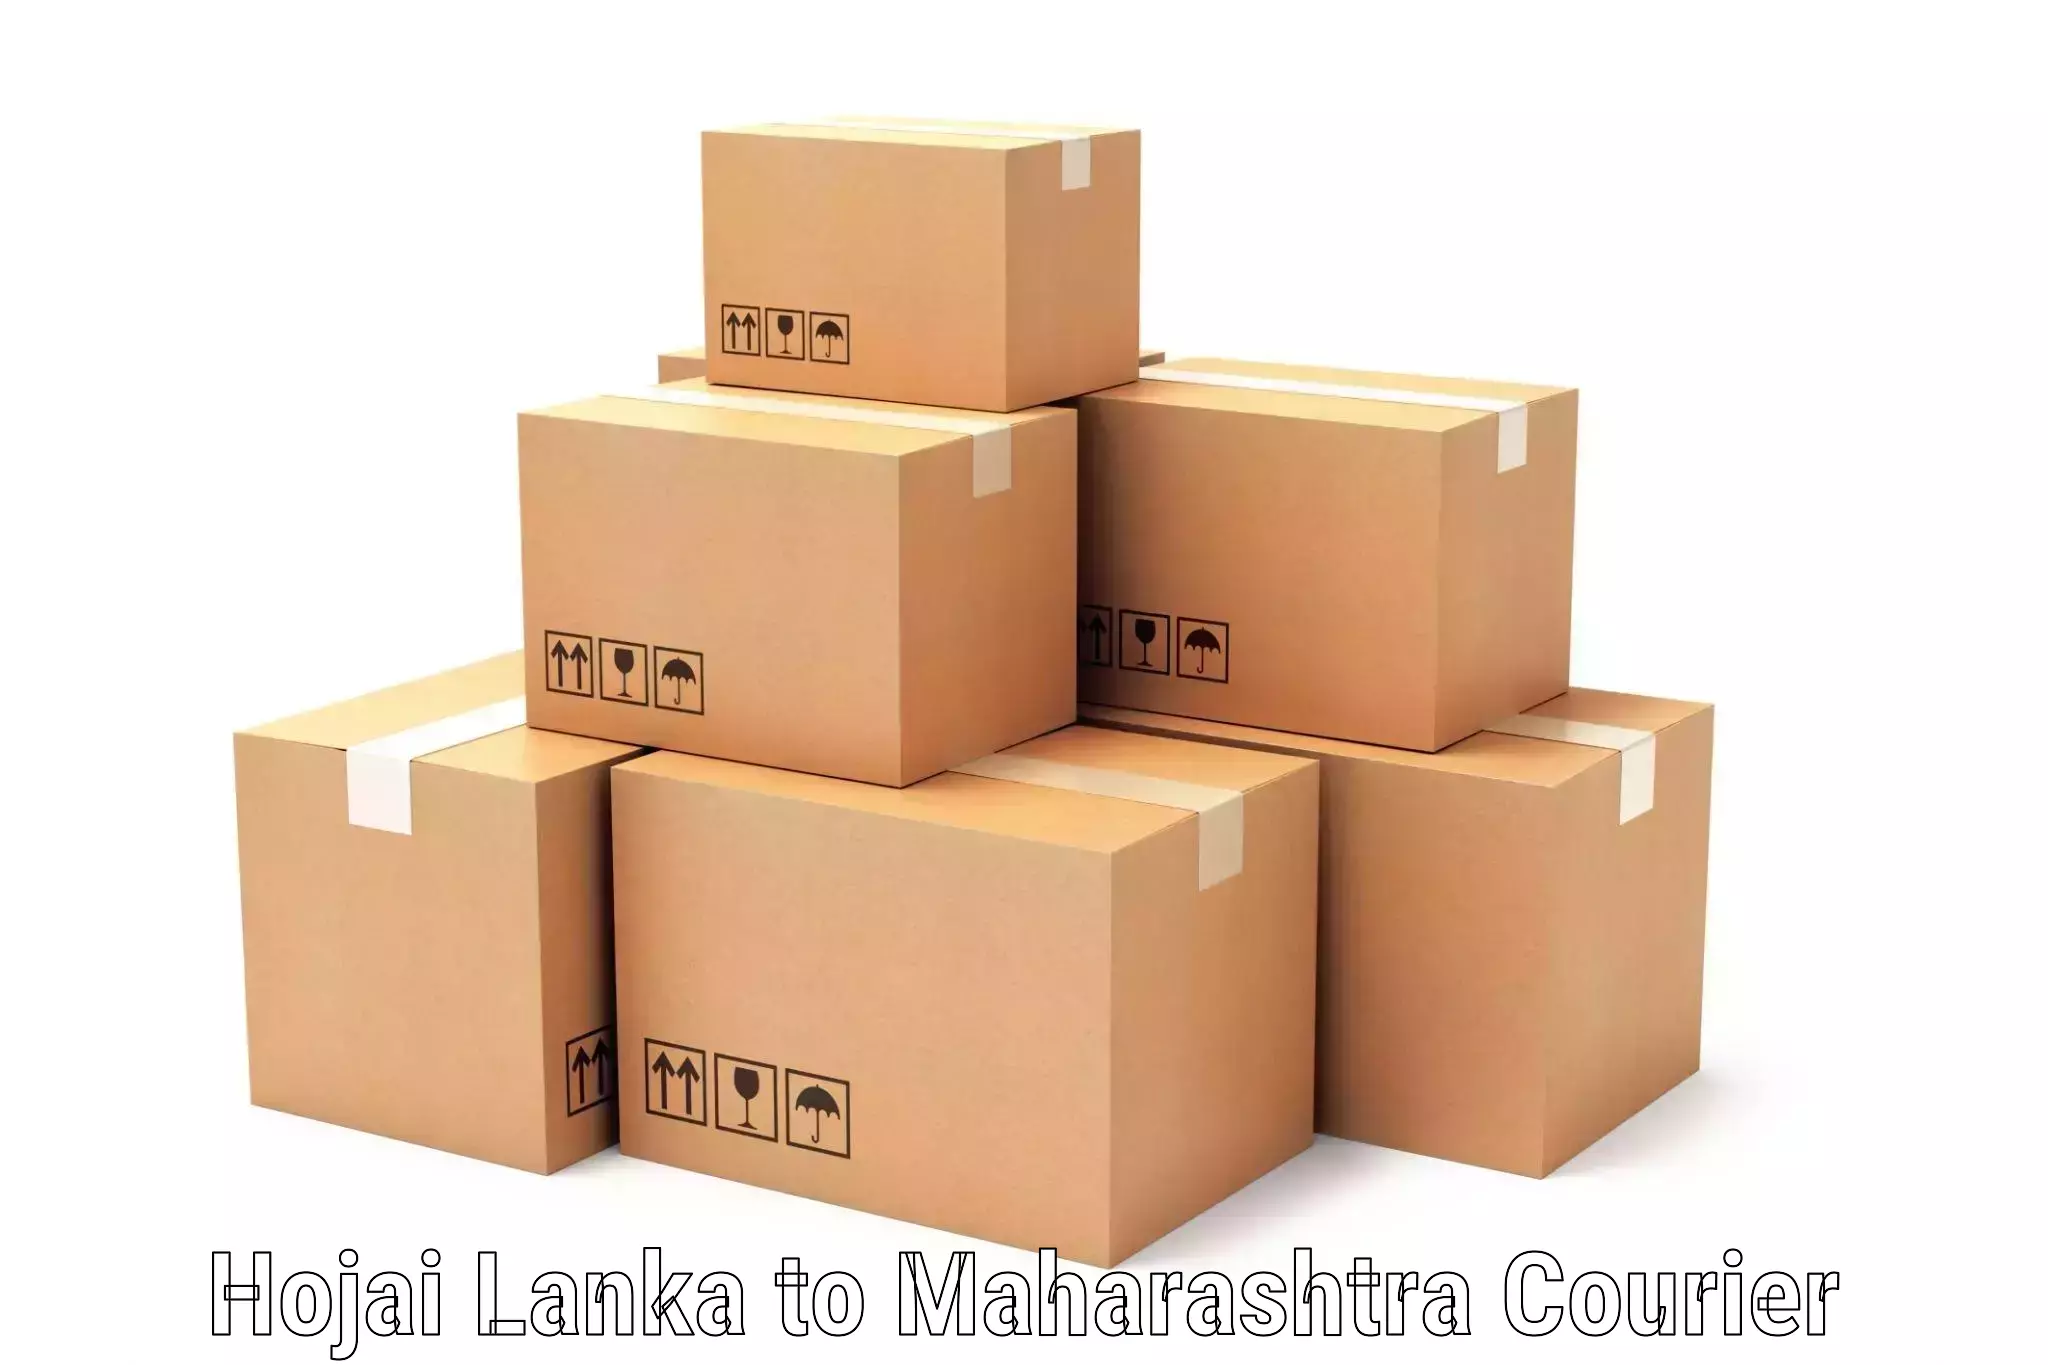 Express postal services Hojai Lanka to Warud